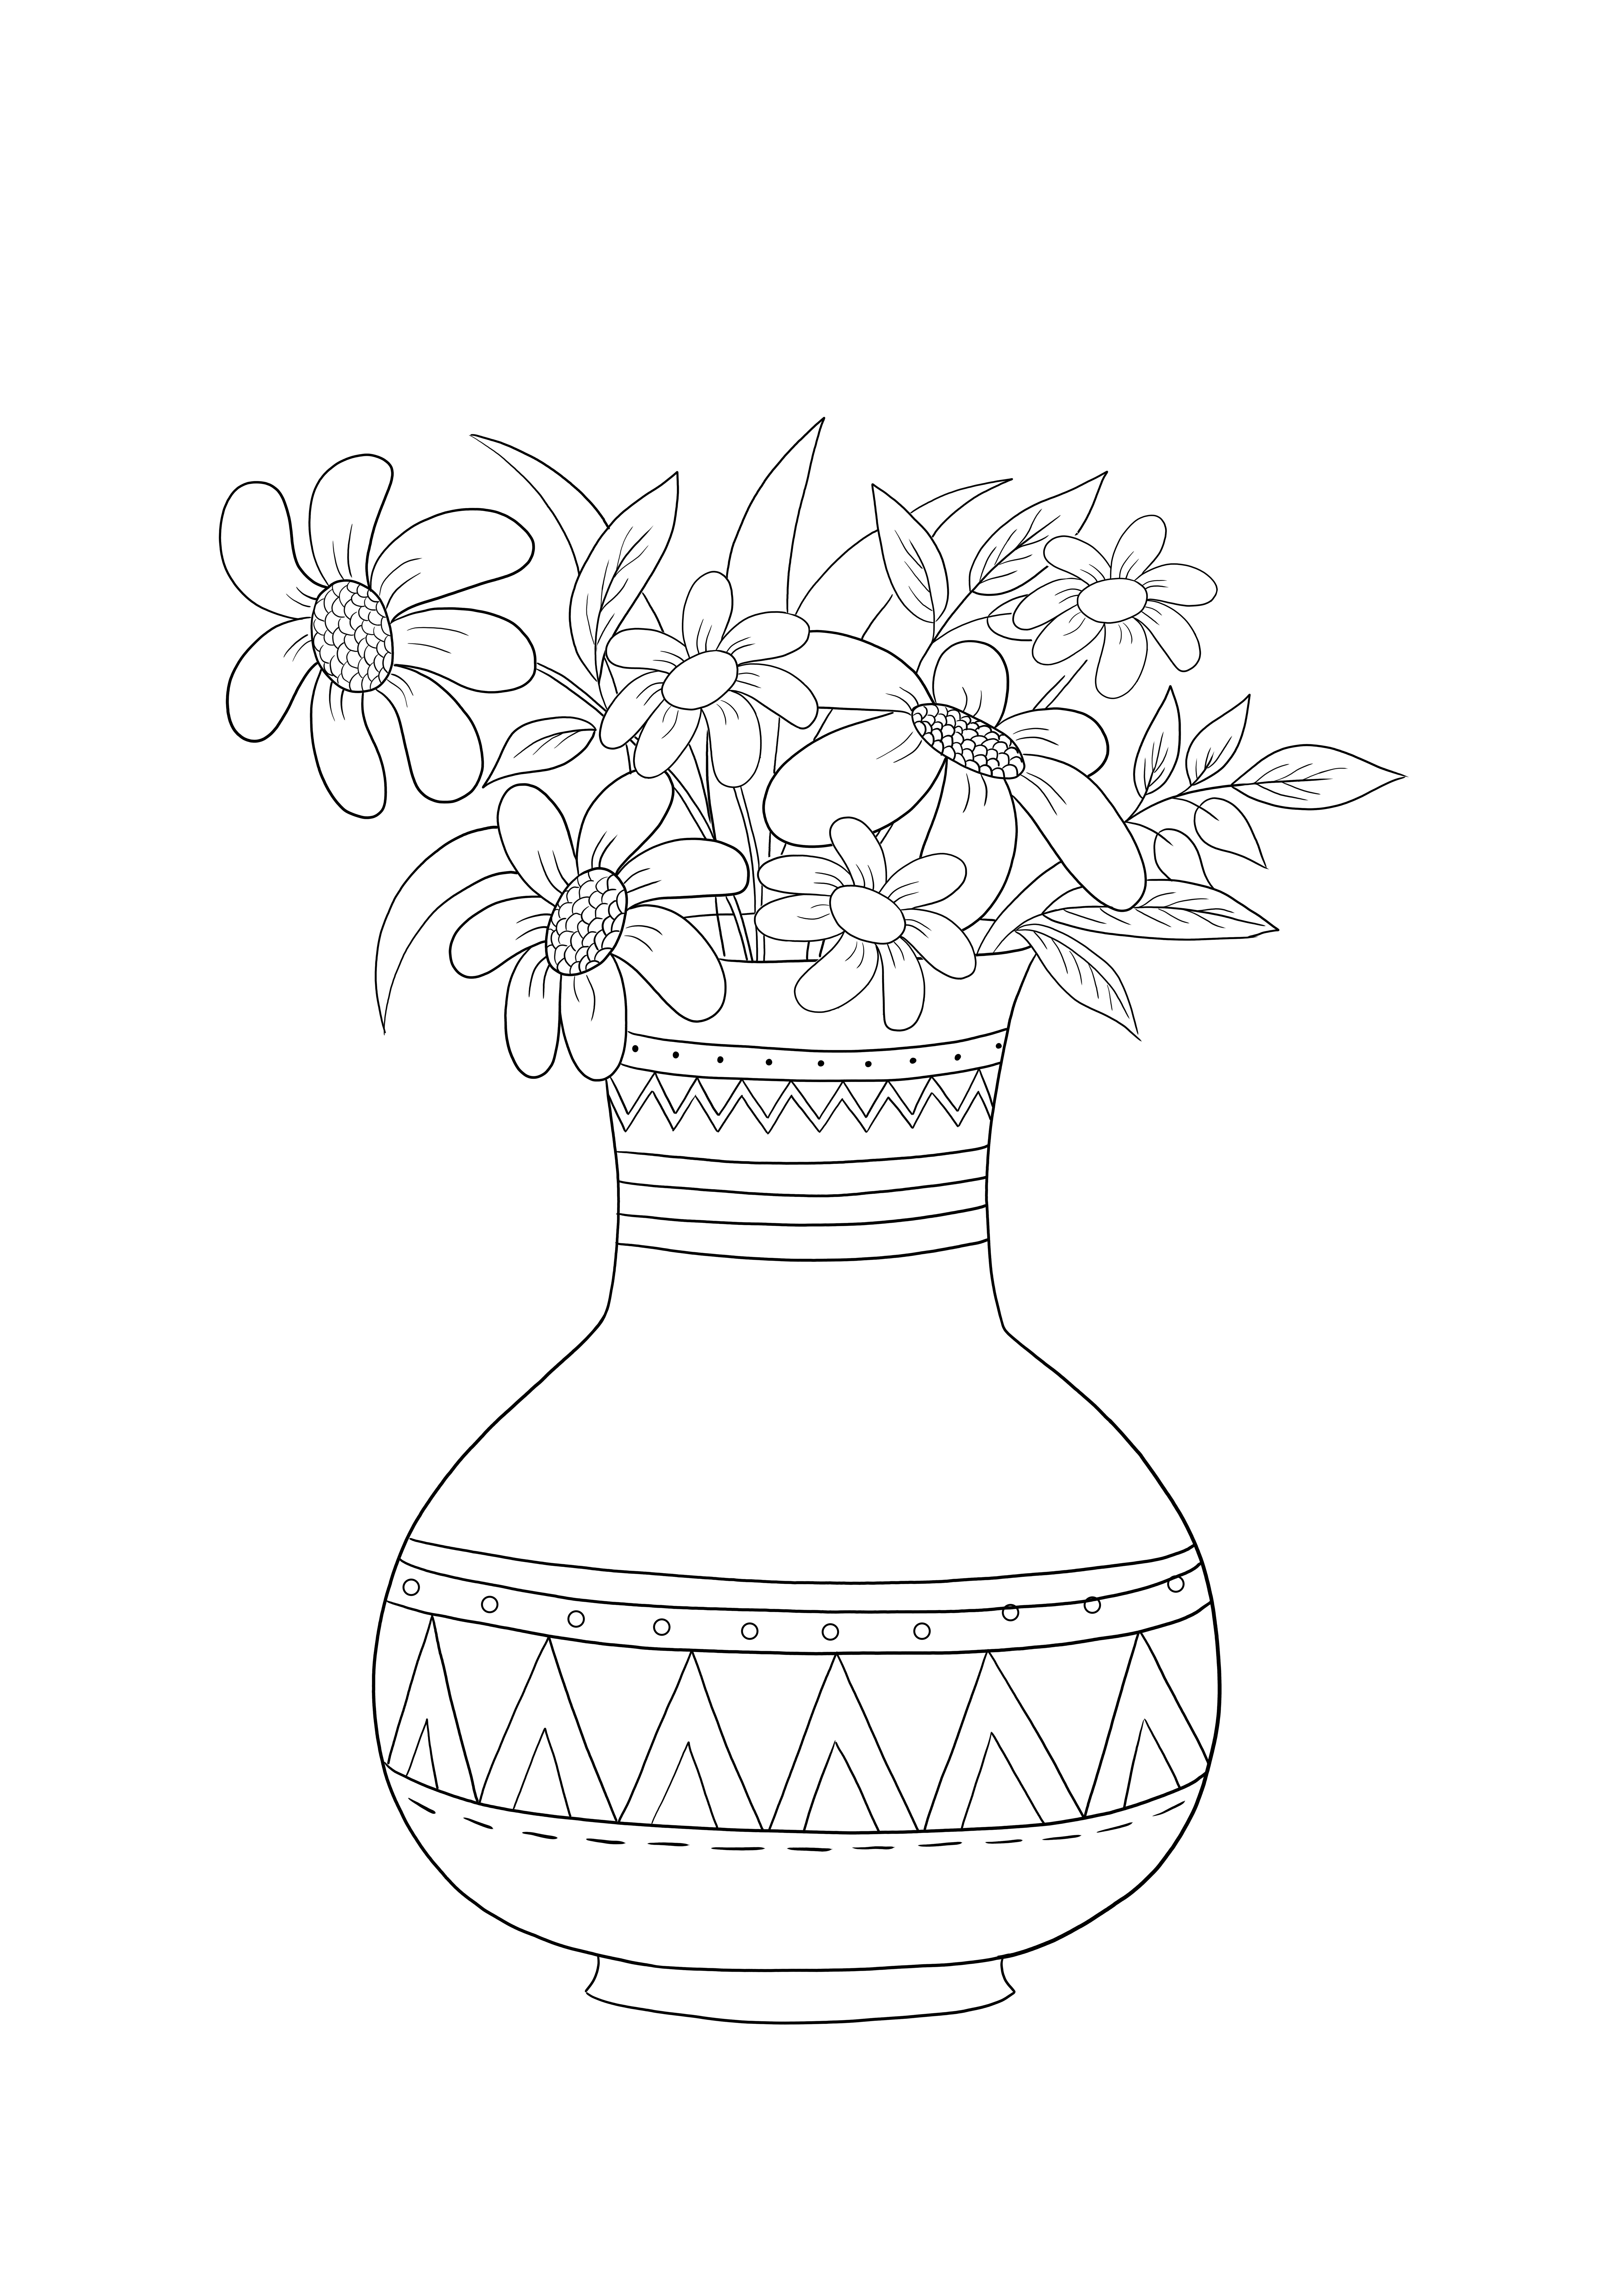 Un hermoso jarrón de flores de margaritas para imprimir gratis e imagen a color